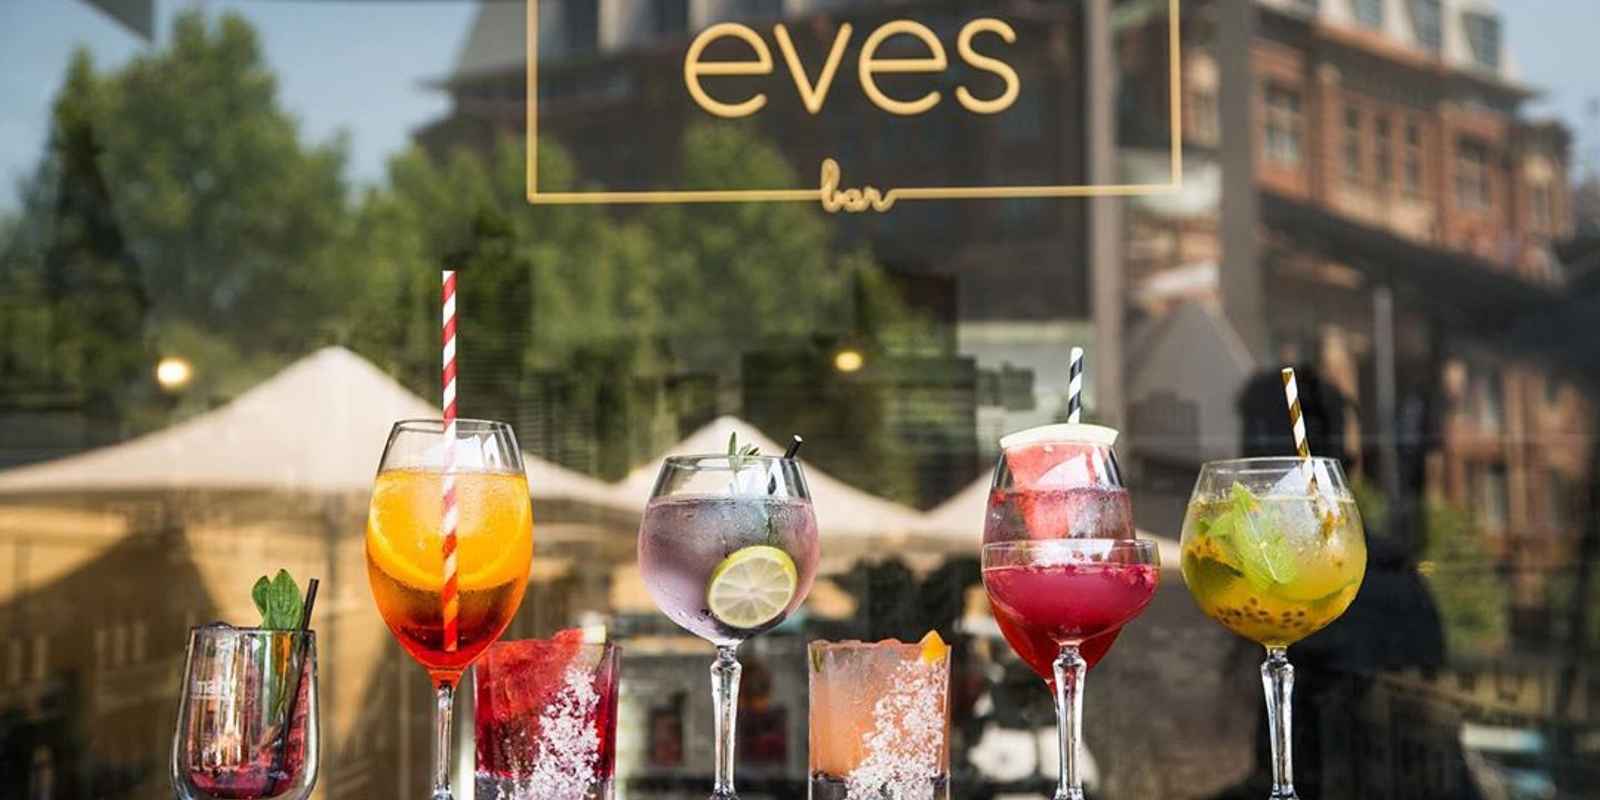 Eve's Bar